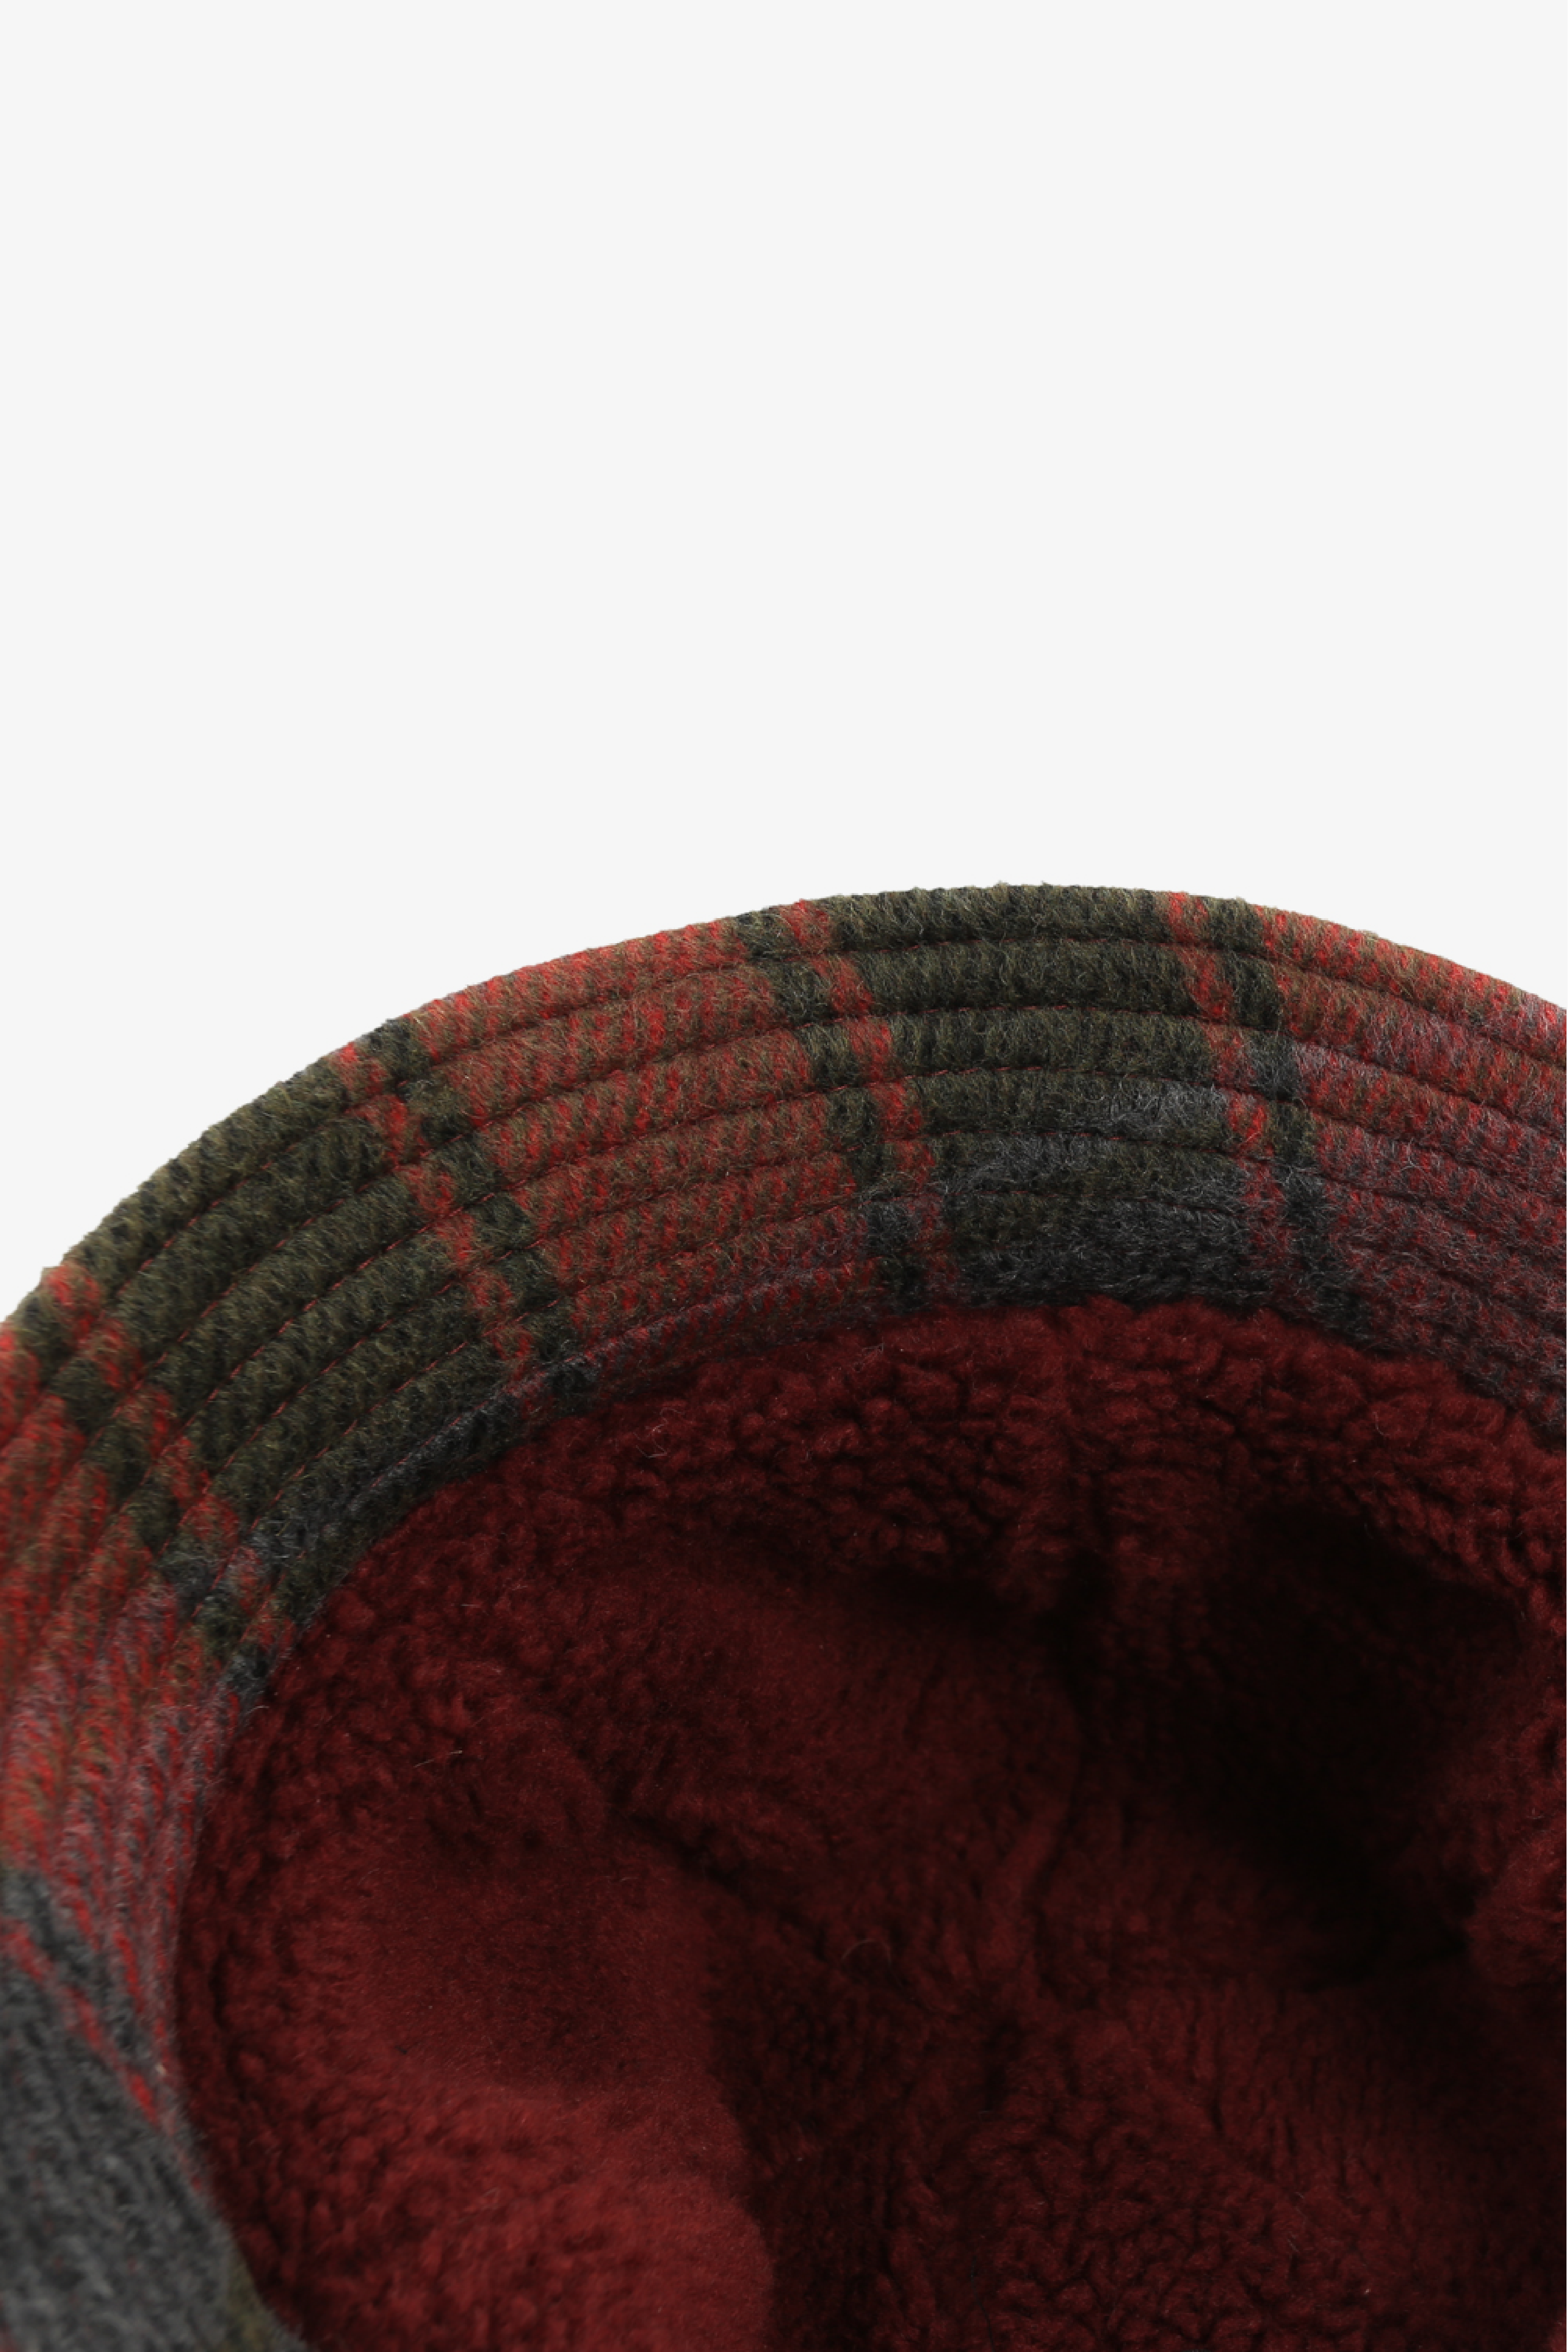 Selectshop FRAME - RASSVET Flannel Bucket Hat All-accessories Dubai